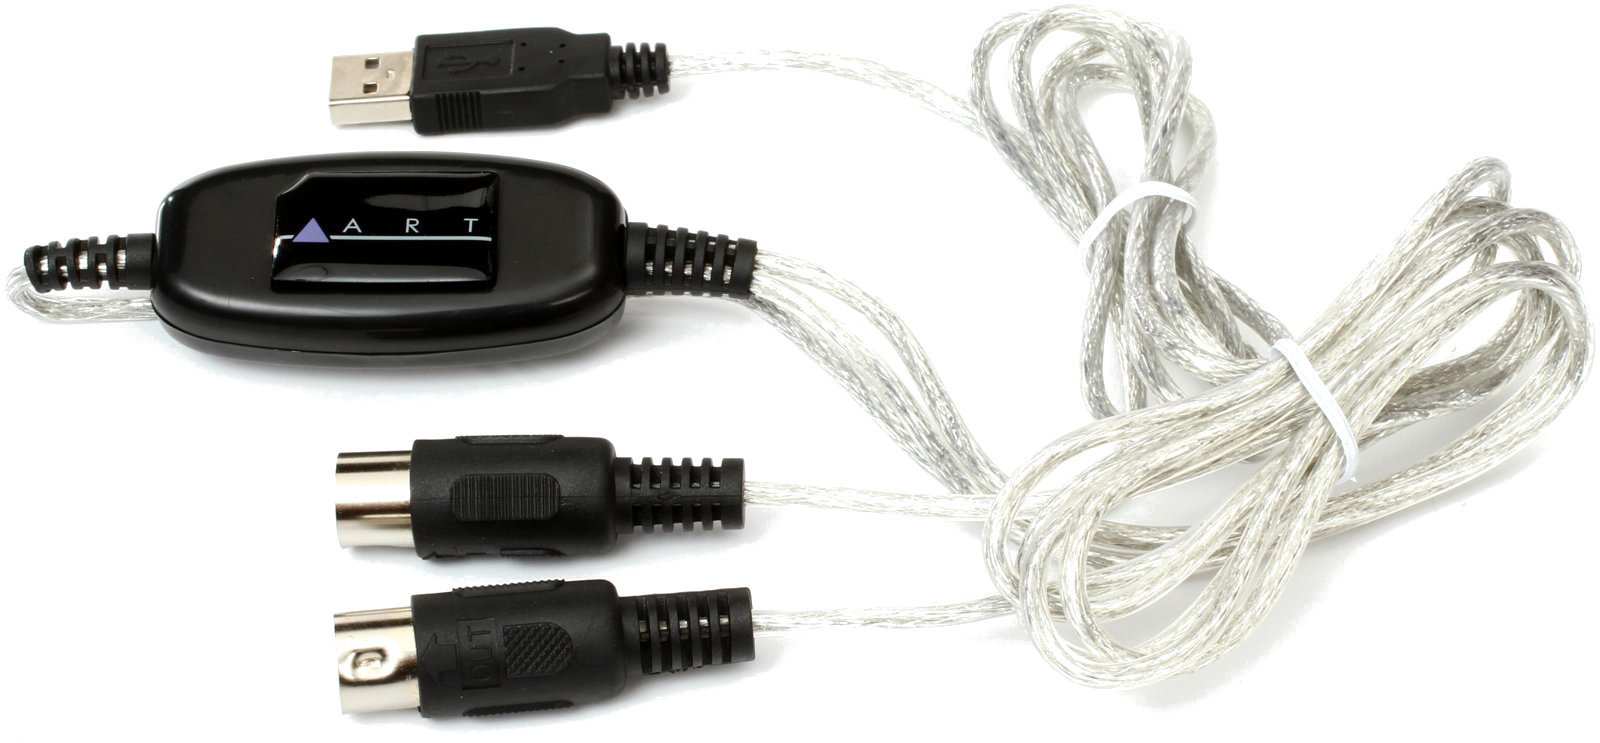 USB-ljudgränssnitt ART Mconnect USB-To-MIDI Cable